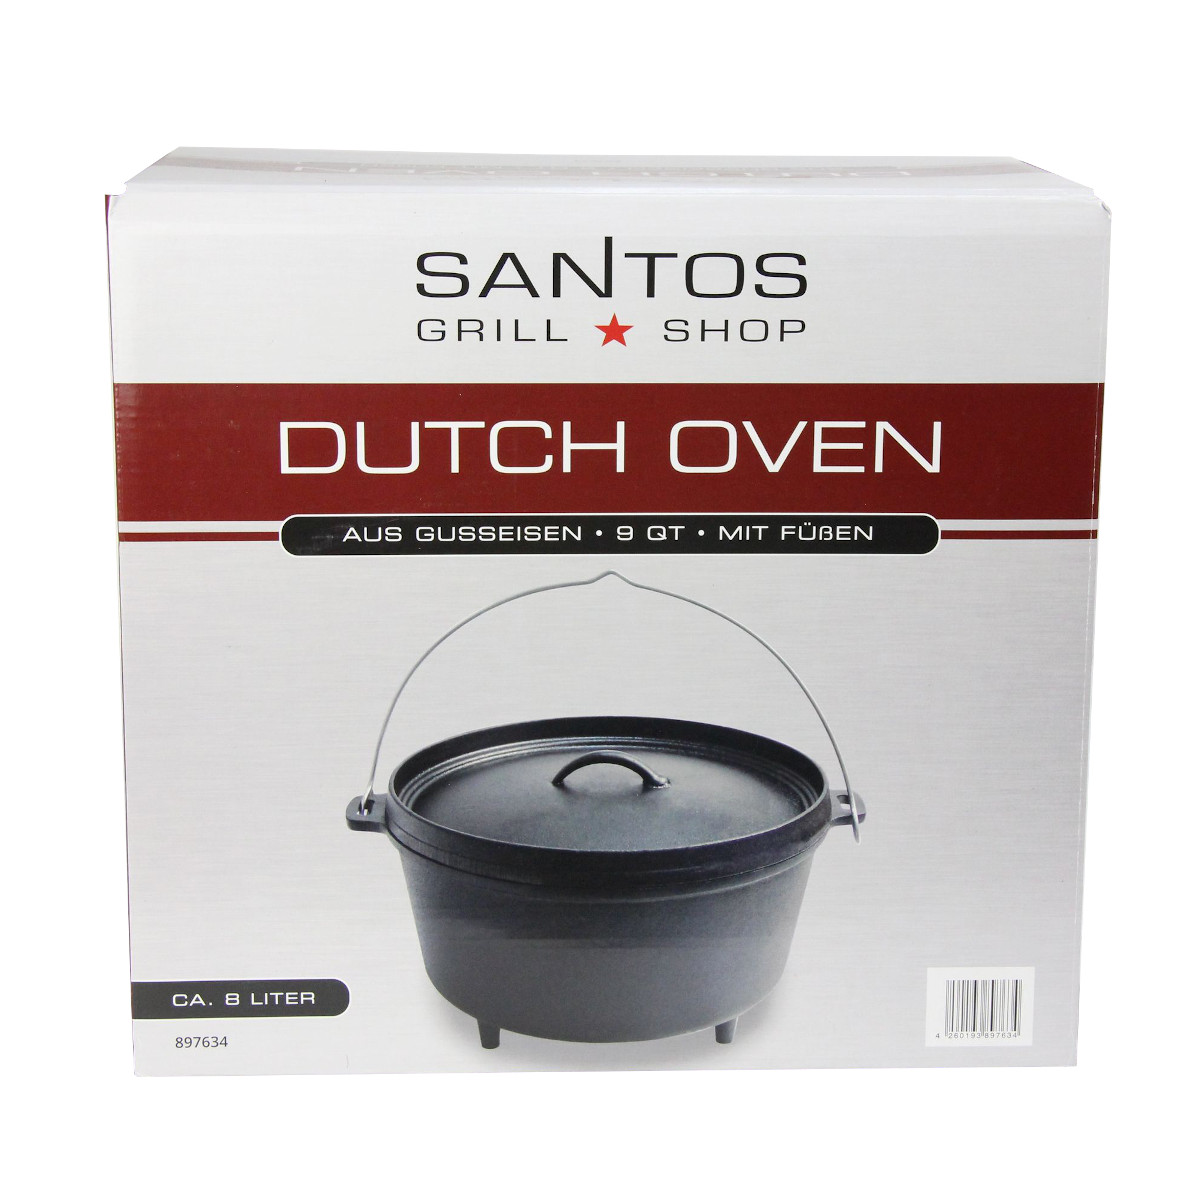 SANTOS Dutch Oven Feuertopf Schmortopf Camp Oven ca. 8 Liter / 9 Qt mit Füßen